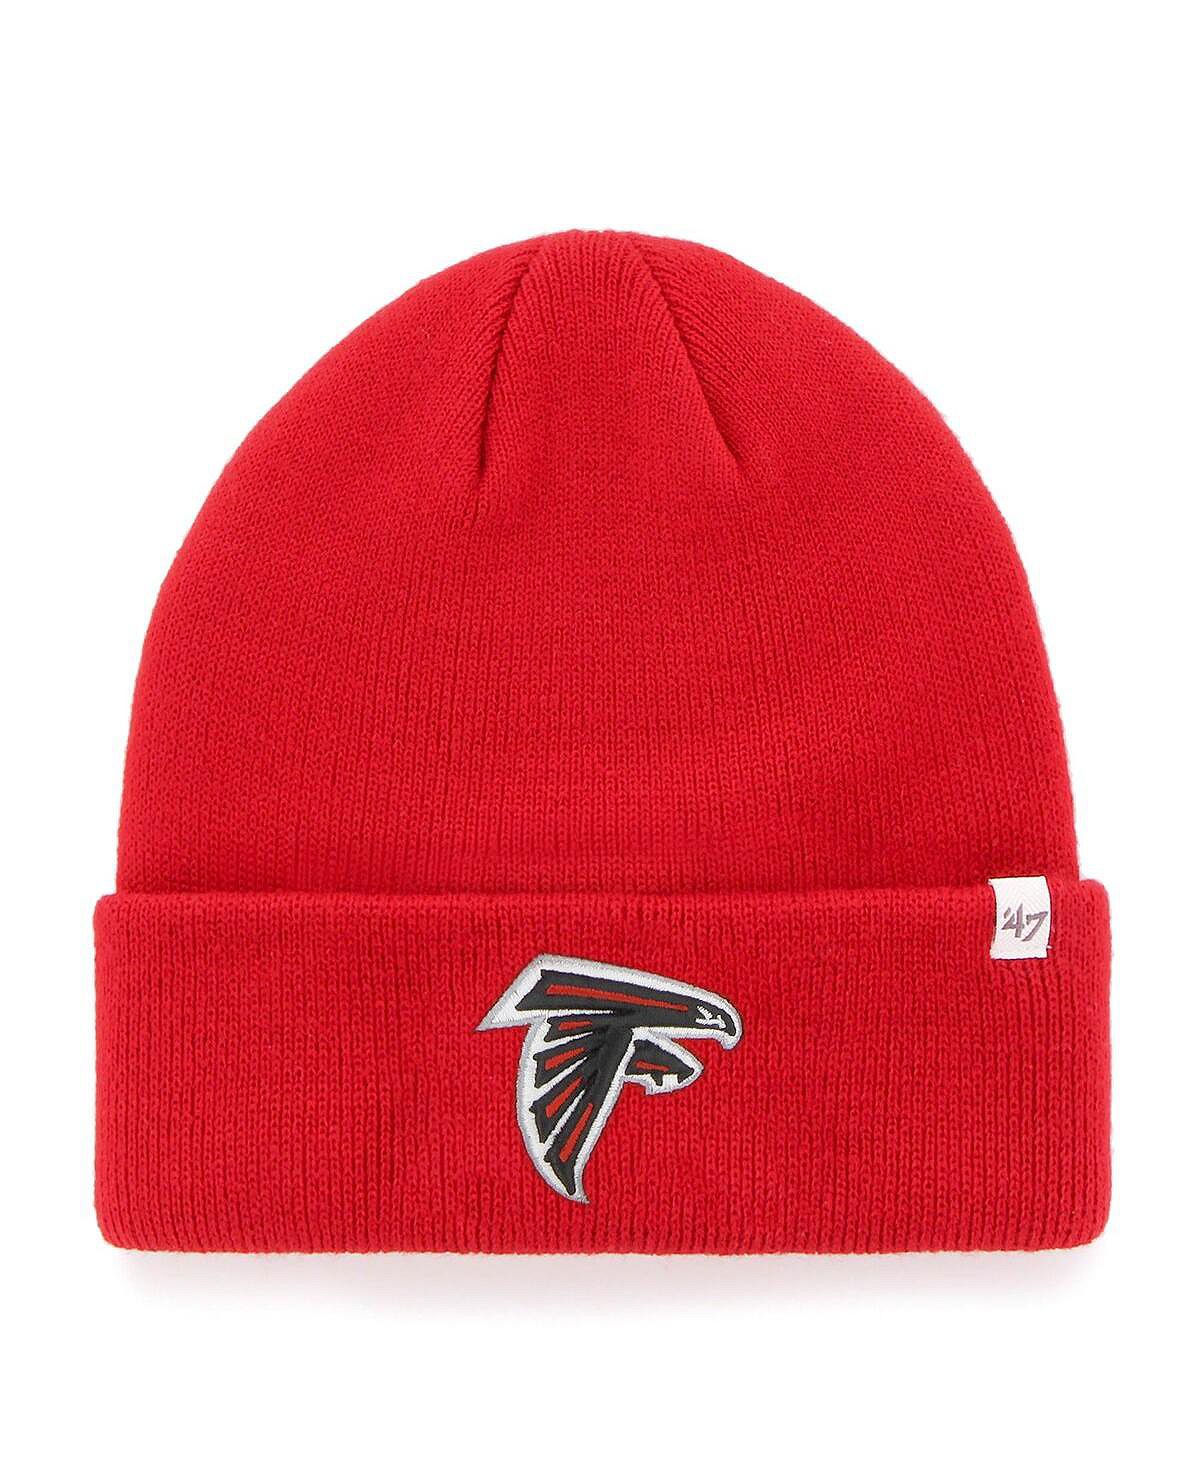 Мужская базовая вязаная шапка Red Atlanta Falcons '47 с манжетами среднего размера '47 Brand мужская базовая вязаная шапка с манжетами 47 baltimore ravens среднего размера фиолетового цвета 47 brand